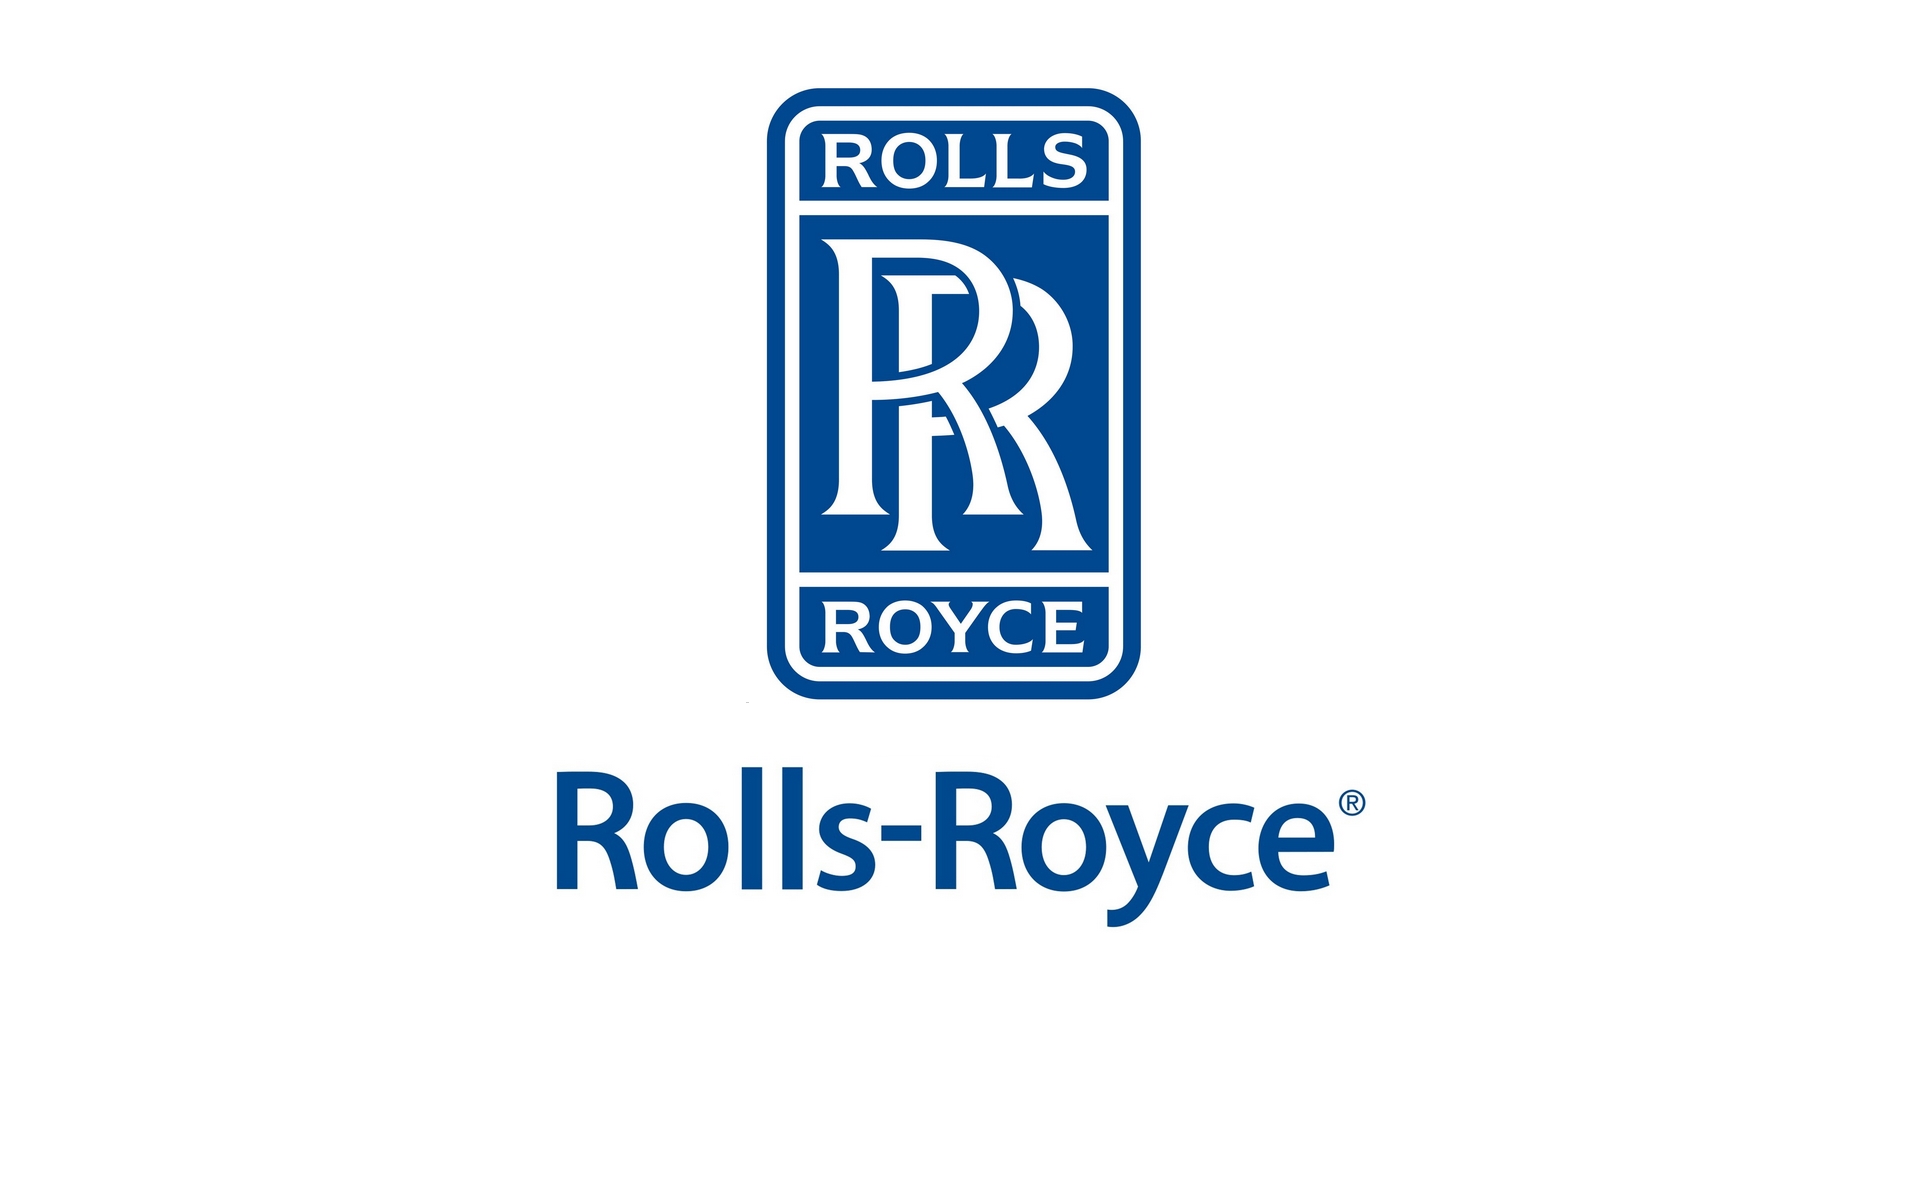 Rolls-Royce logo - HD wallpaper download. Wallpapers, pictures, photos.